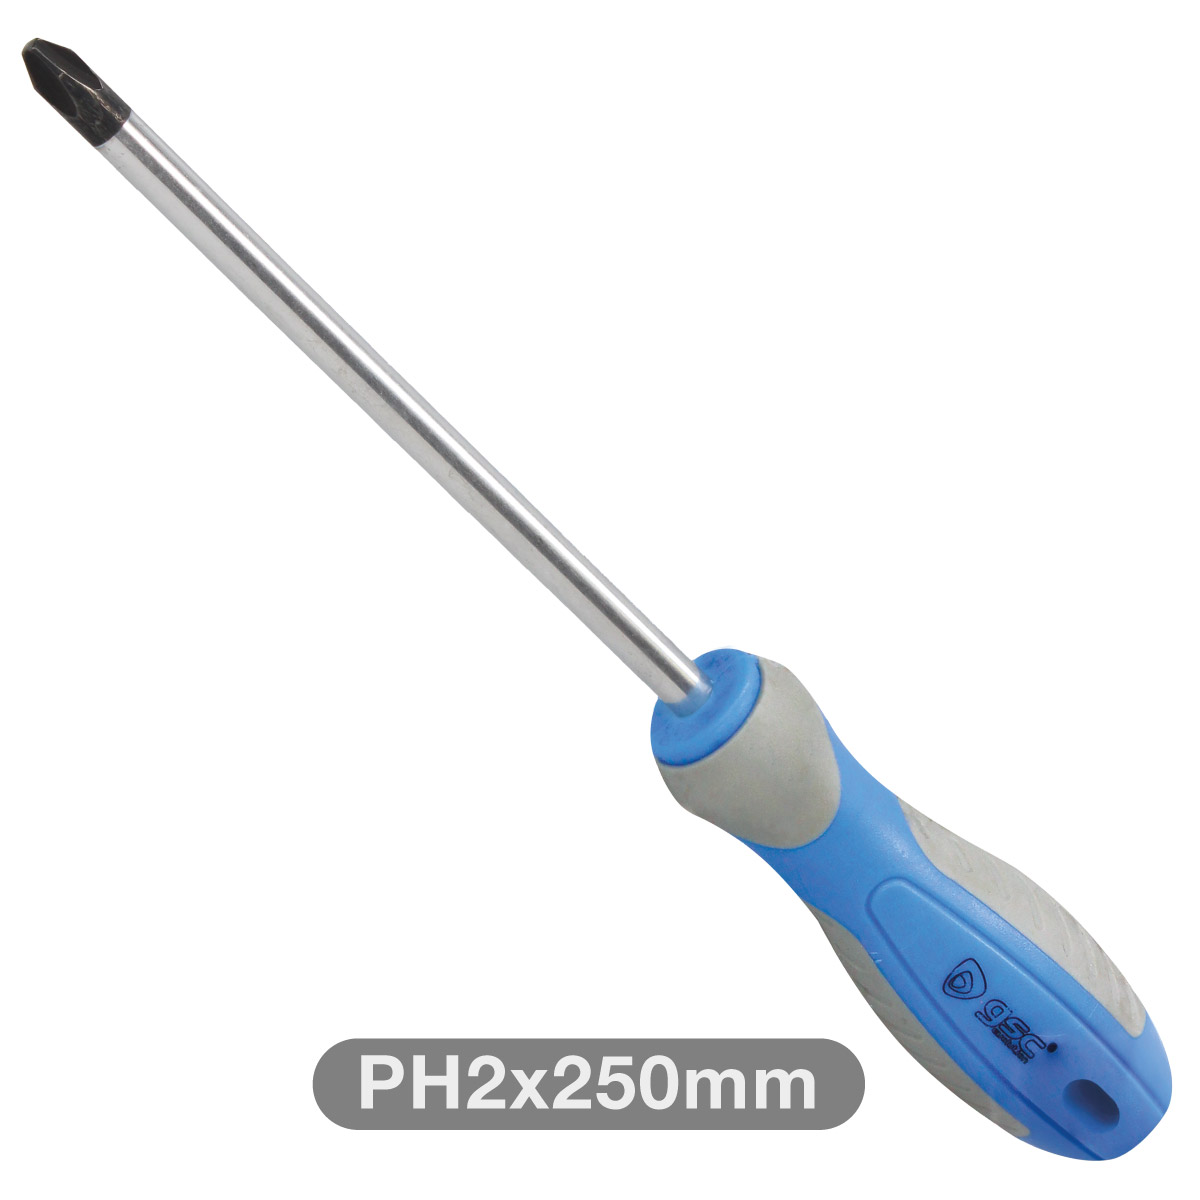 Philips screwdriver PH2x250mm